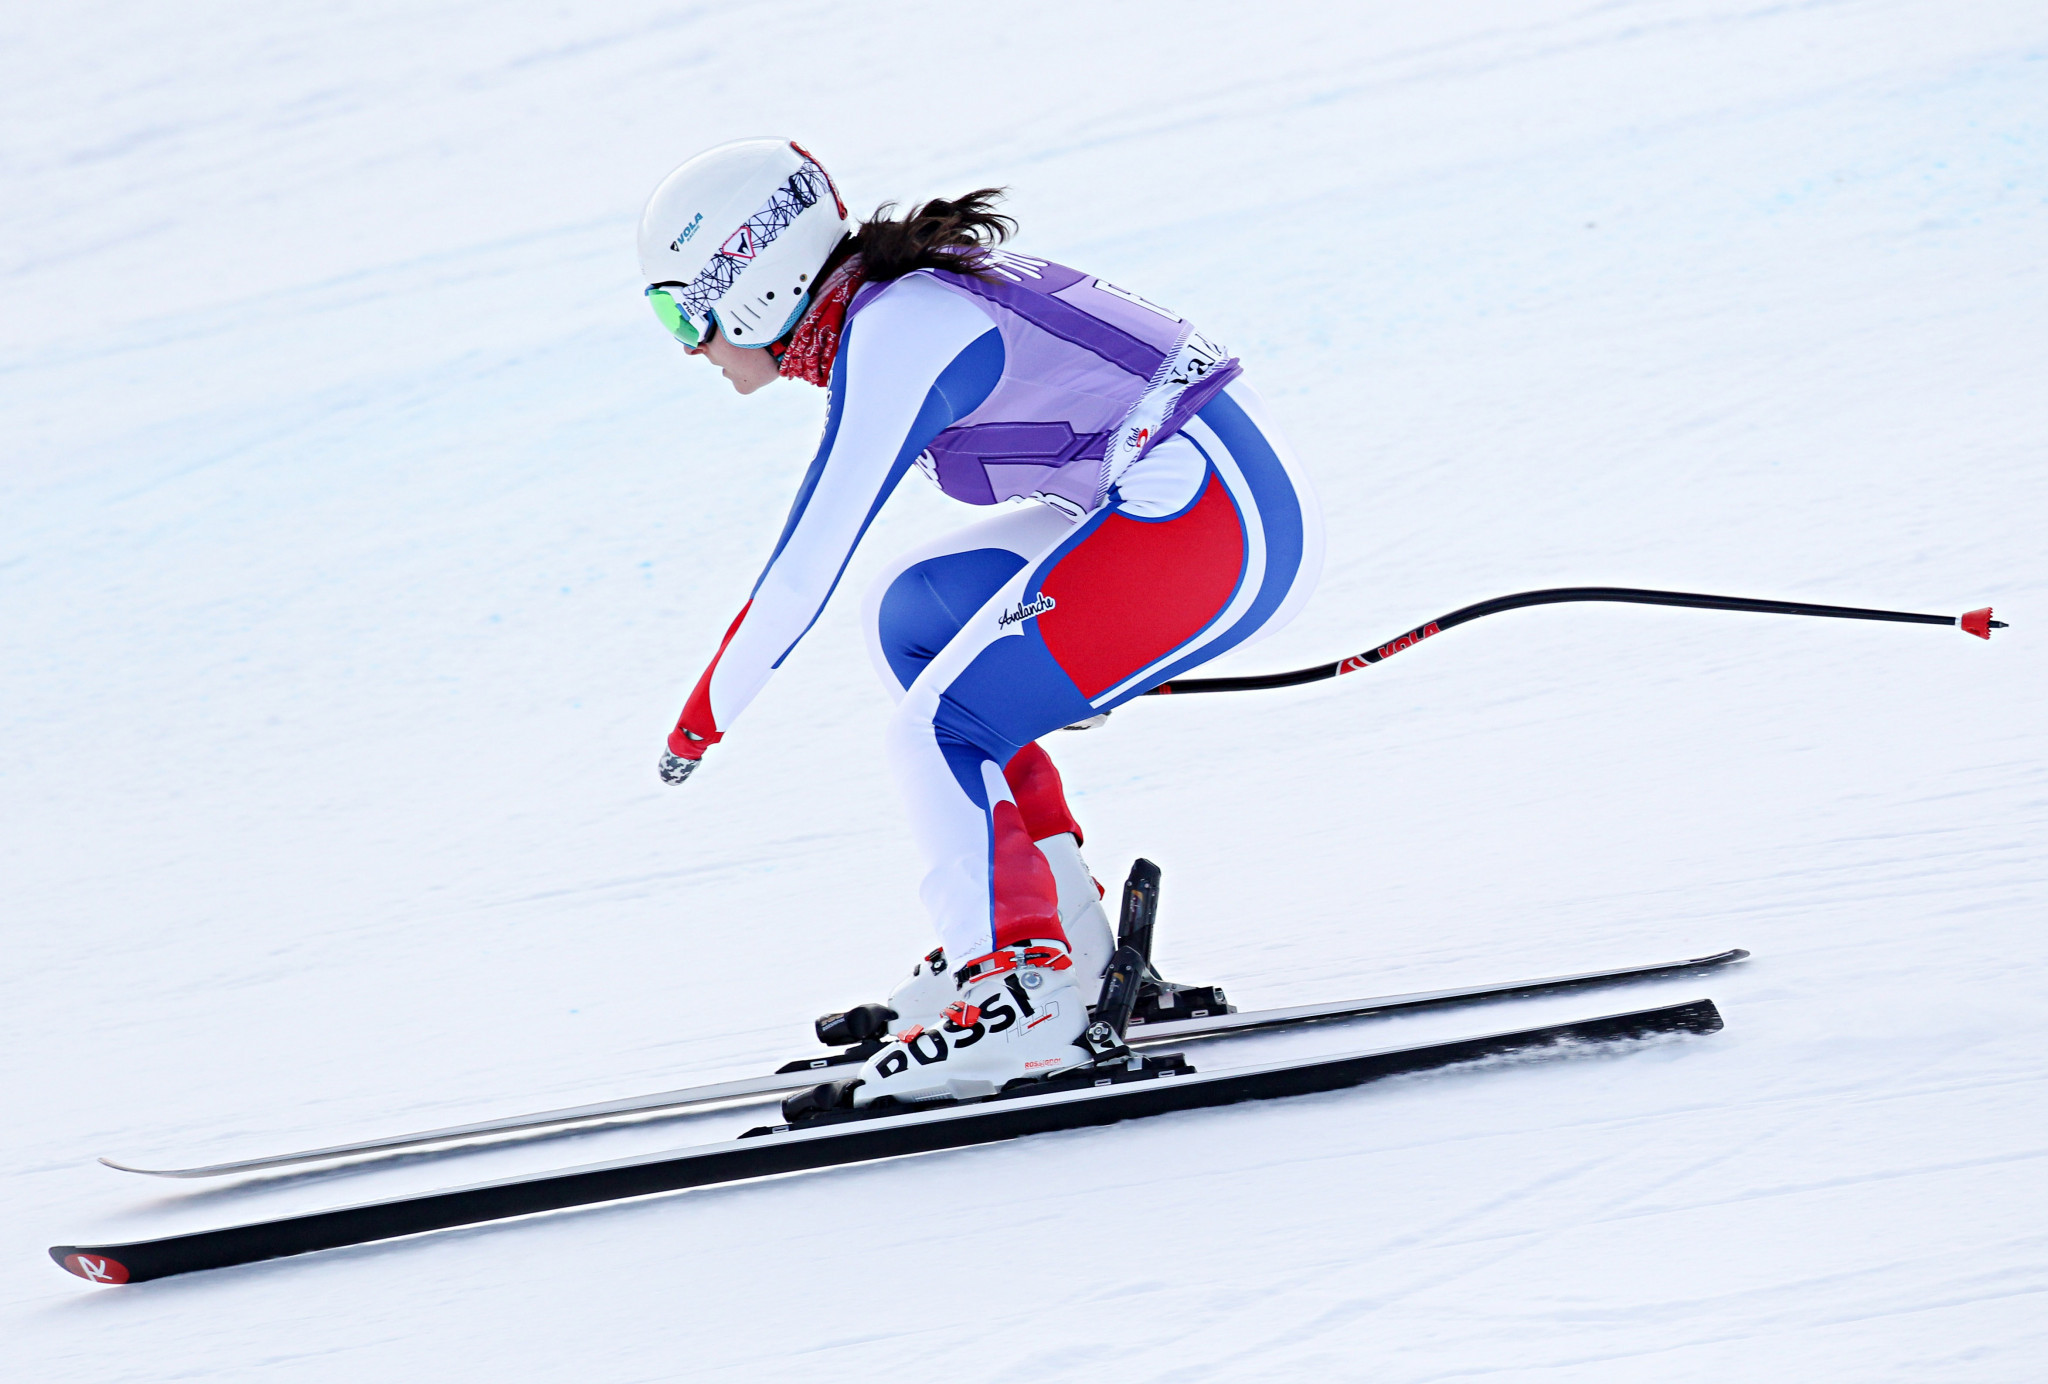 Bochet hoping to continue winning streak at World Para Alpine Skiing World Cup in Kranjska Gora